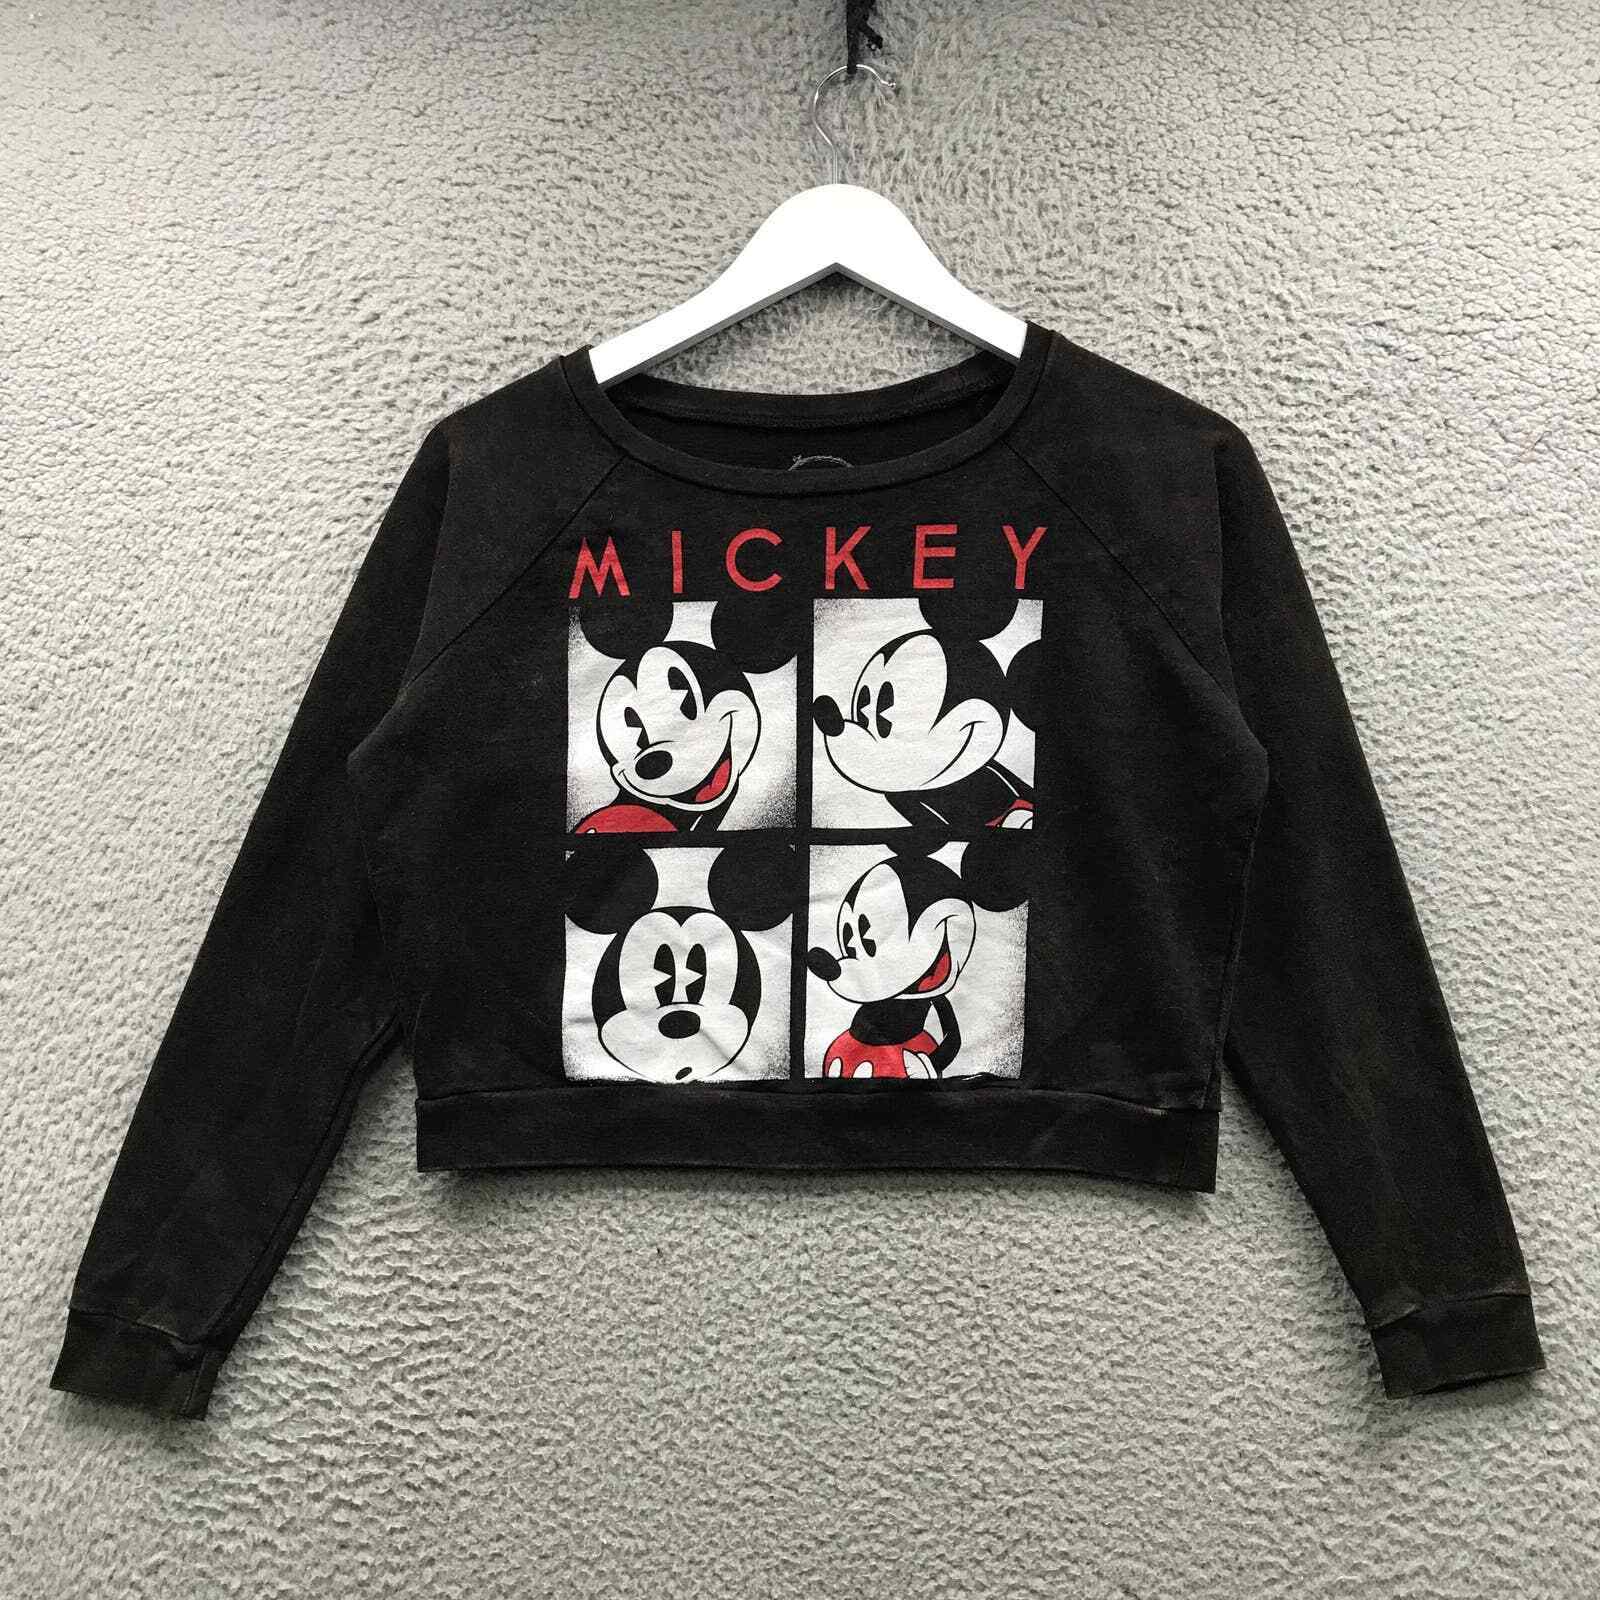 Disney Mickey Mouse Sweatshirt Girls Youth Medium M Long Sleeve Cropped Black